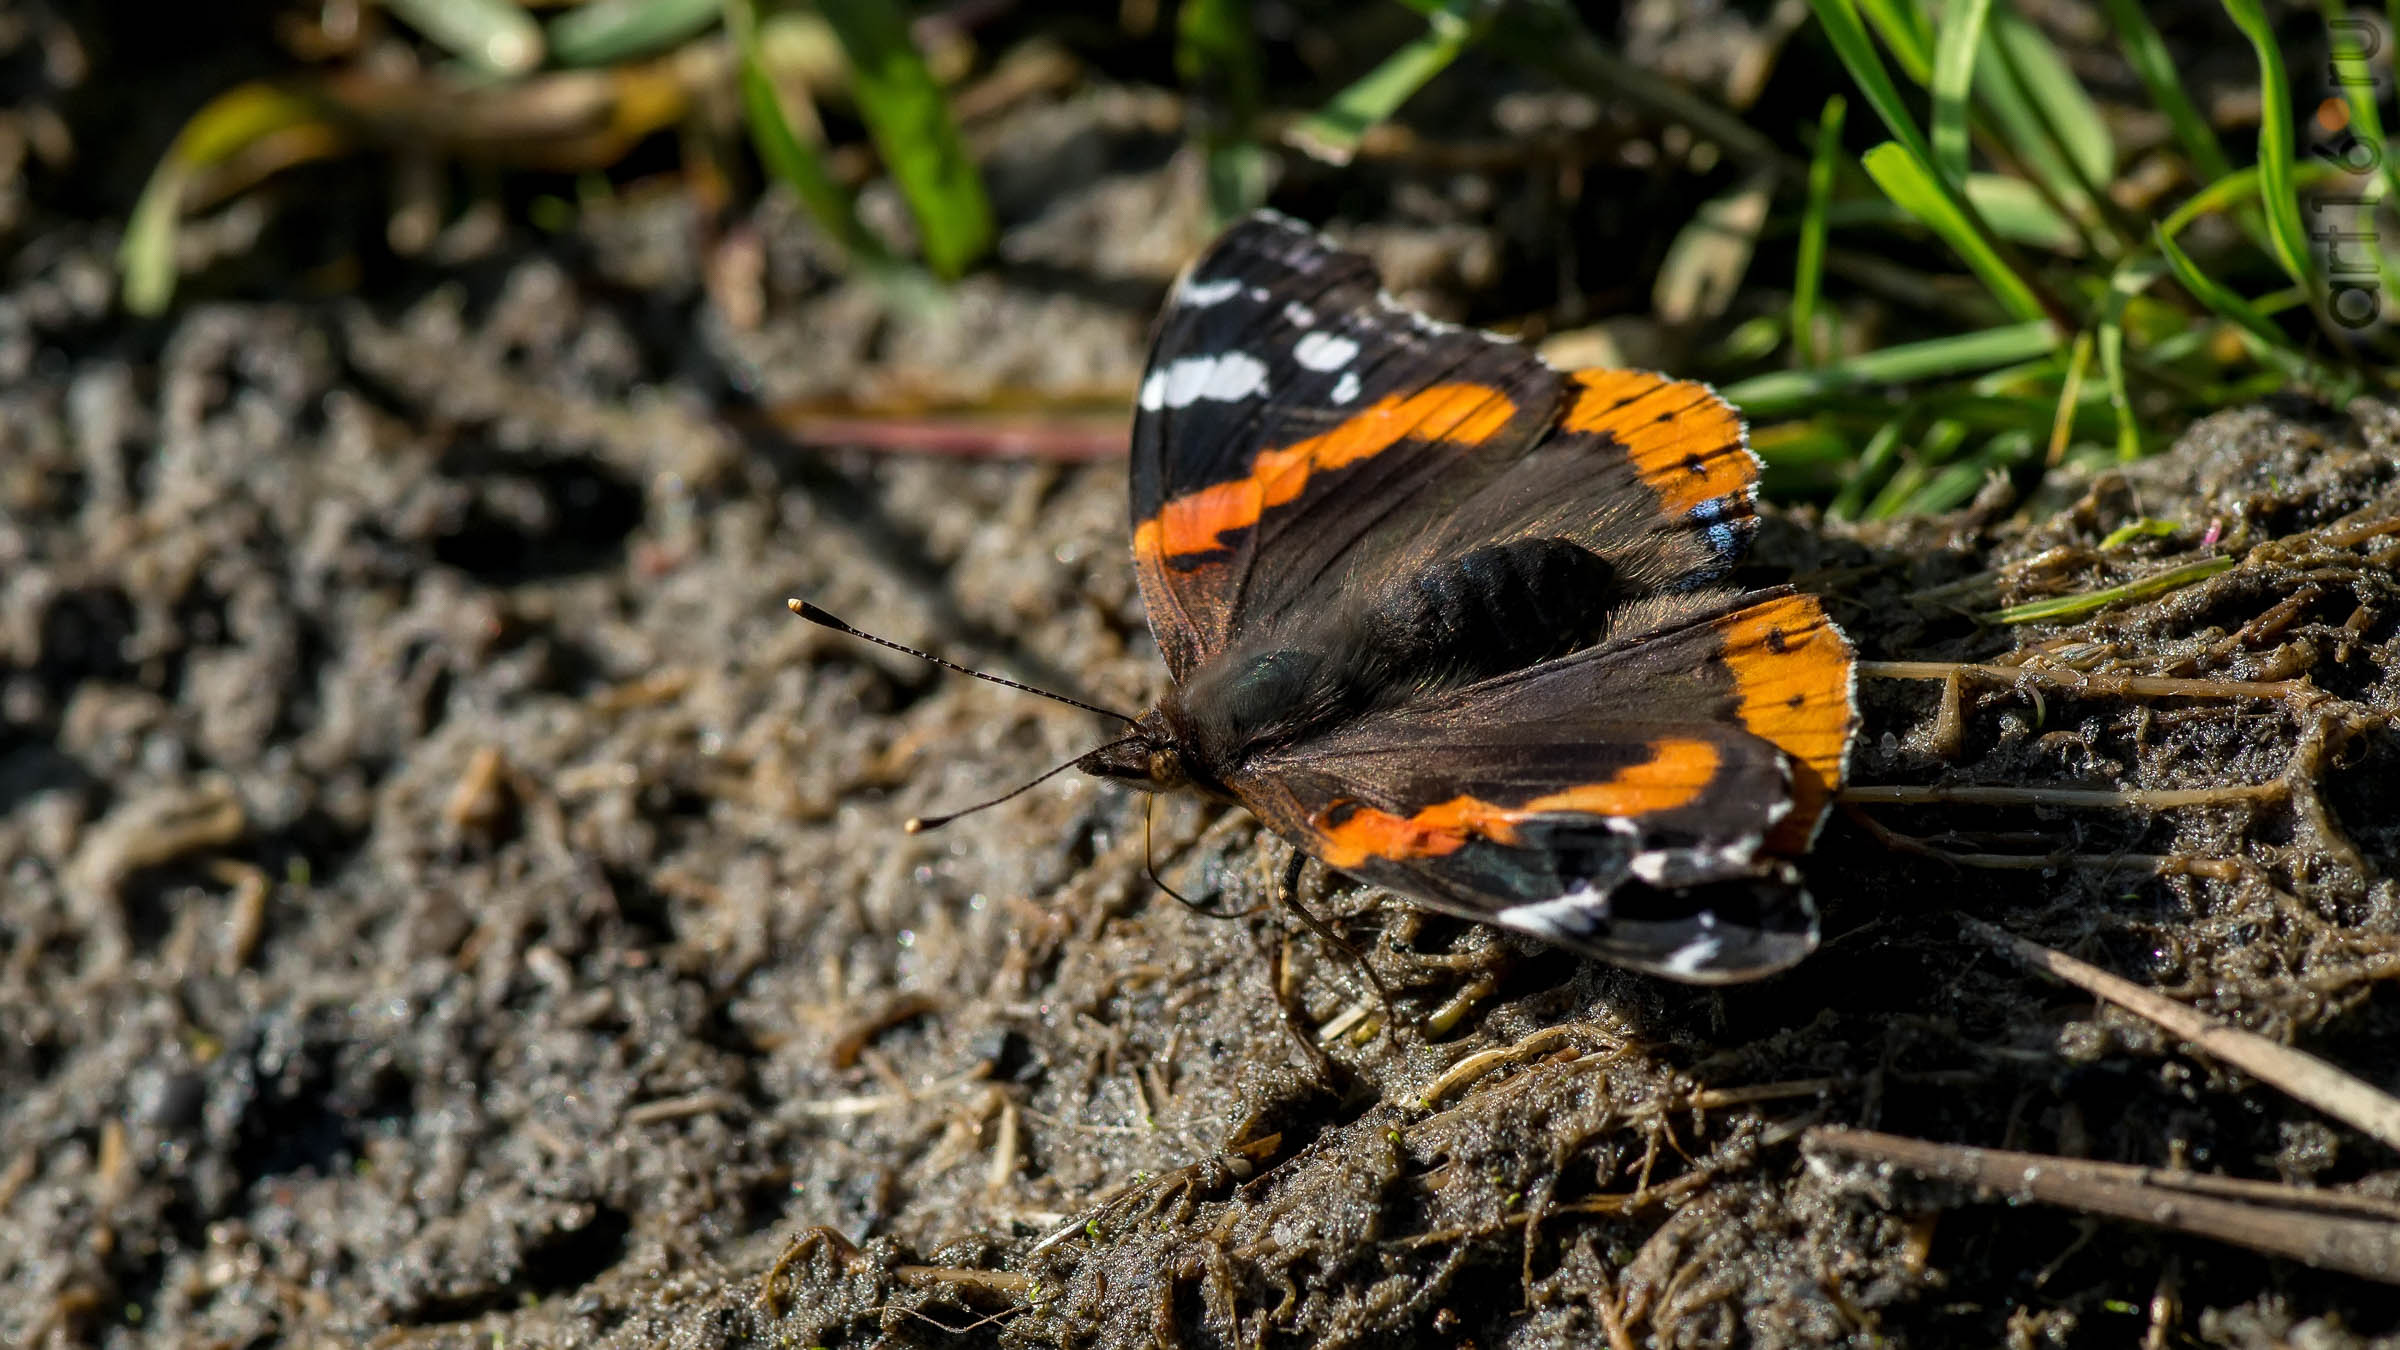 Адмирал (лат. Vanessa atalanta) — дневная бабочка из семейства нимфалид (Nymphalidae)::2018